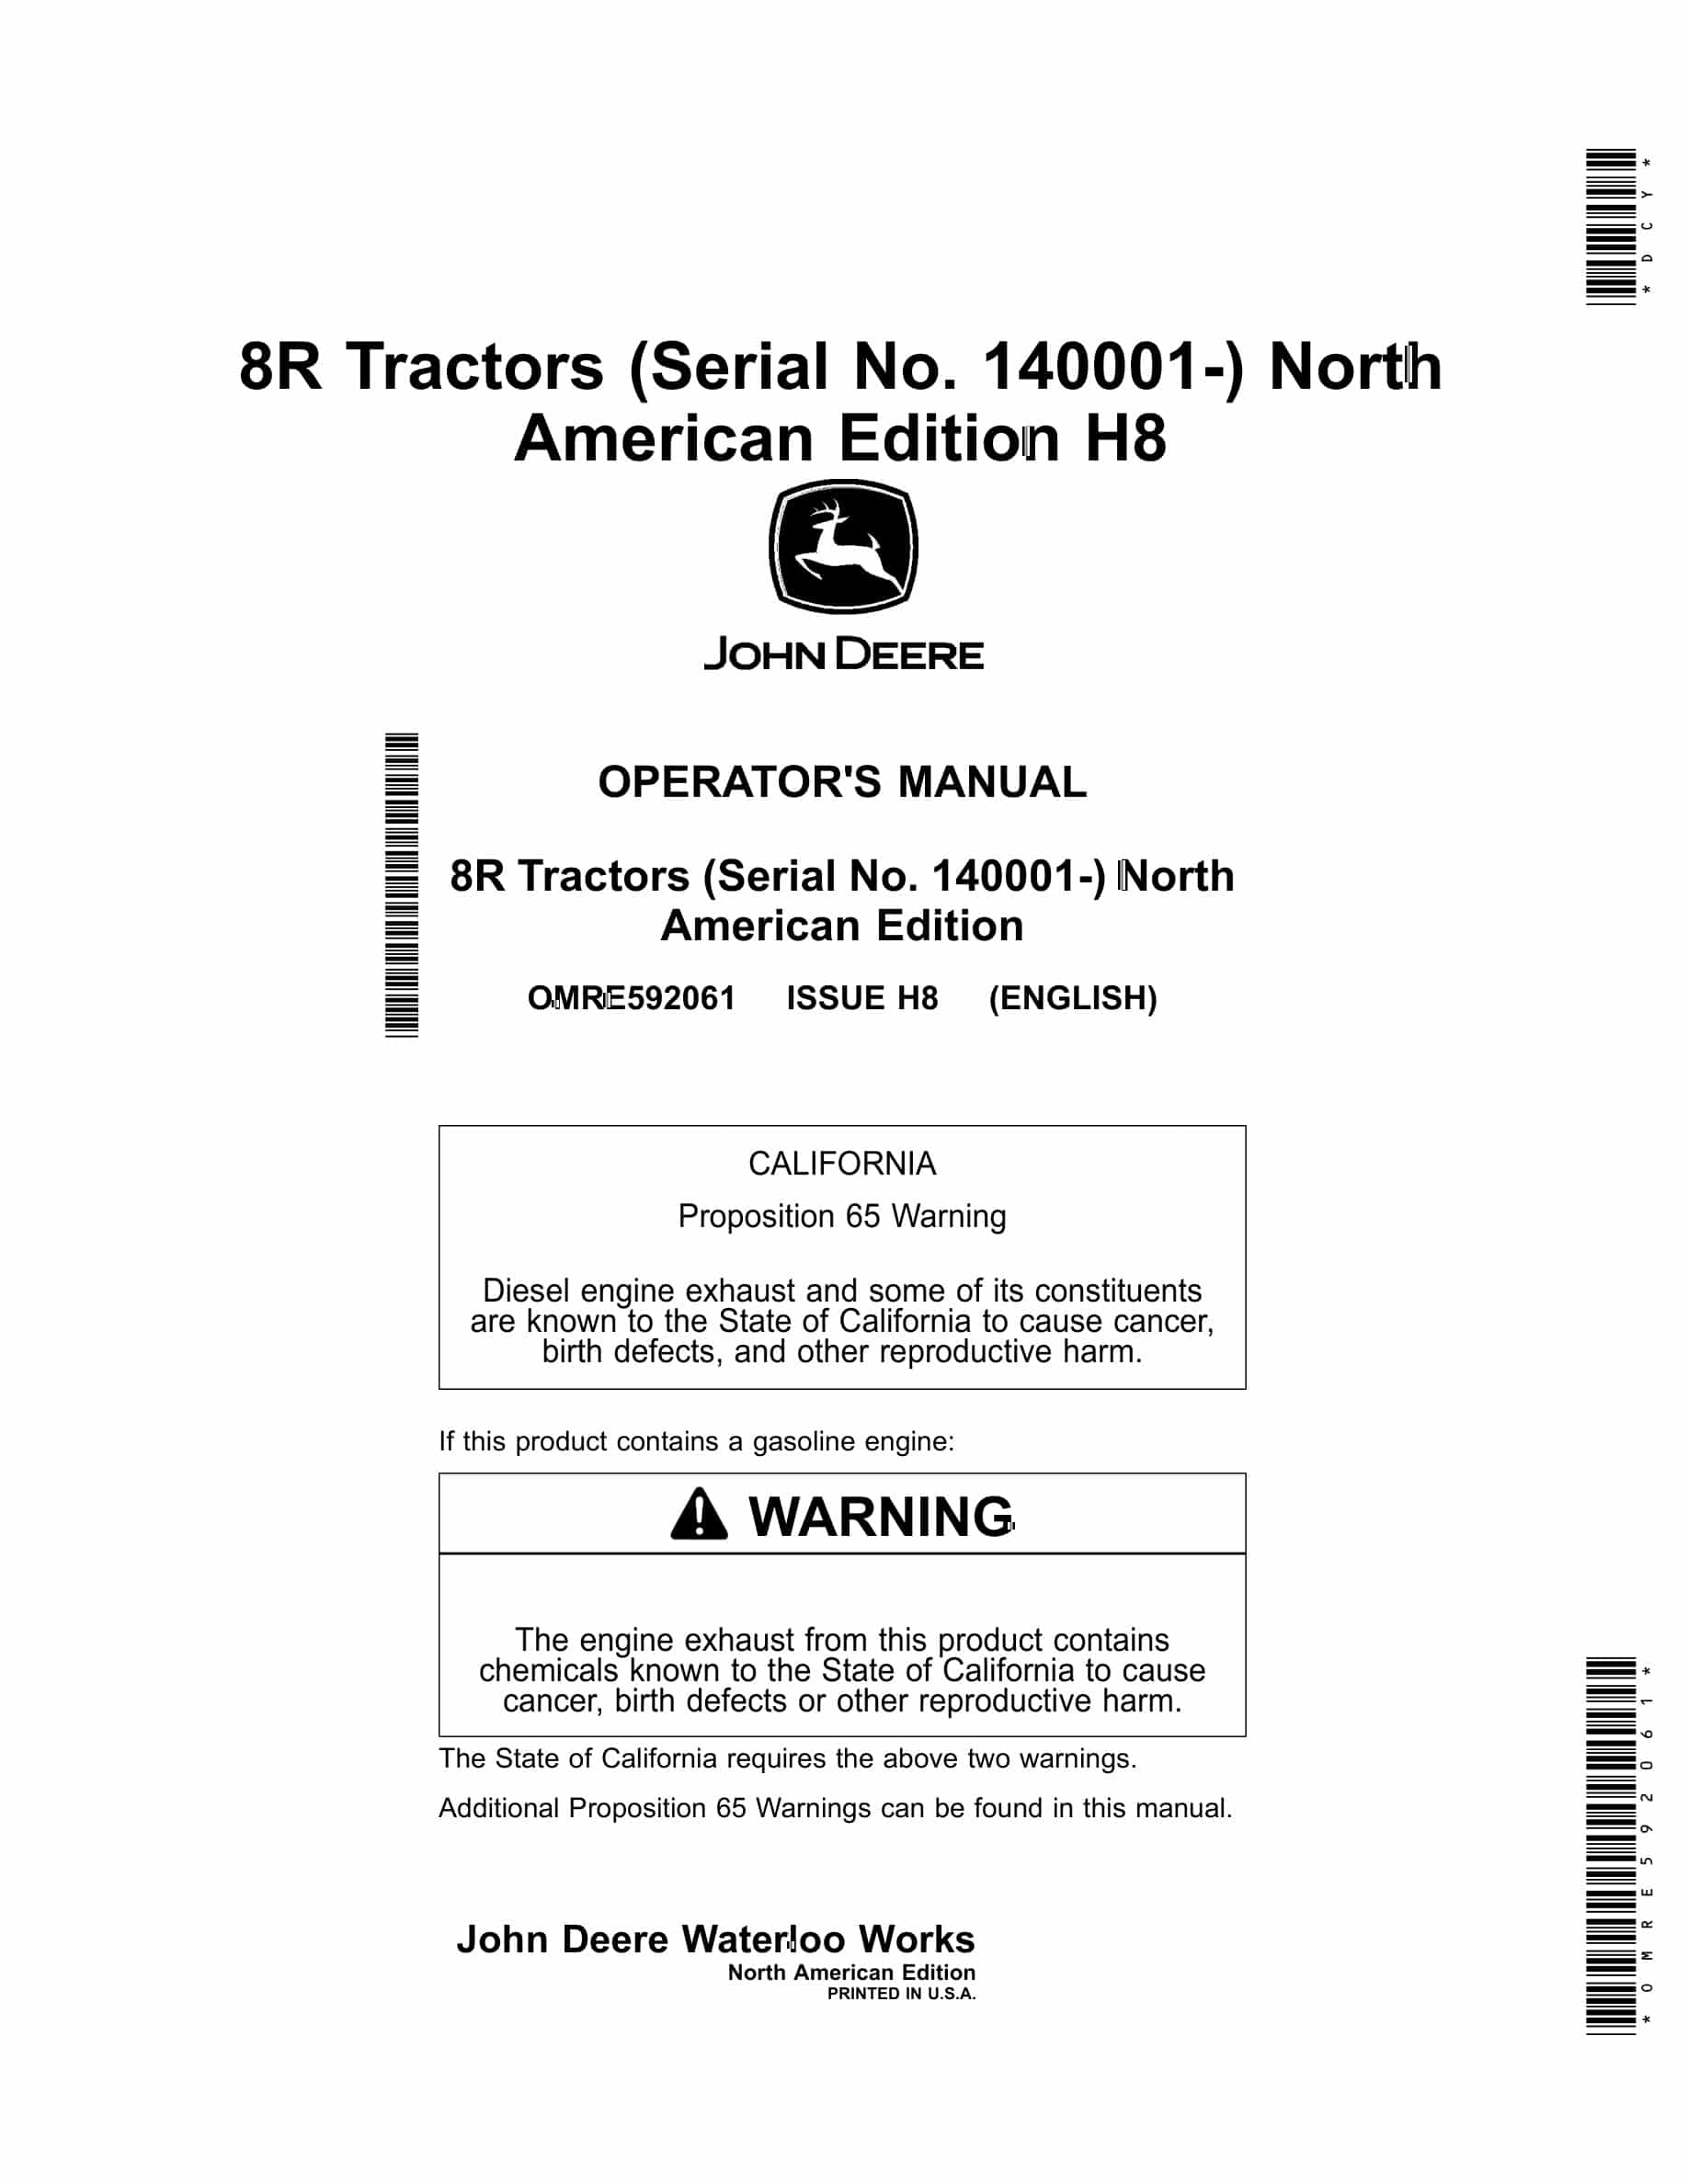 John Deere 8r Tractors Operator Manuals OMRE592061-1